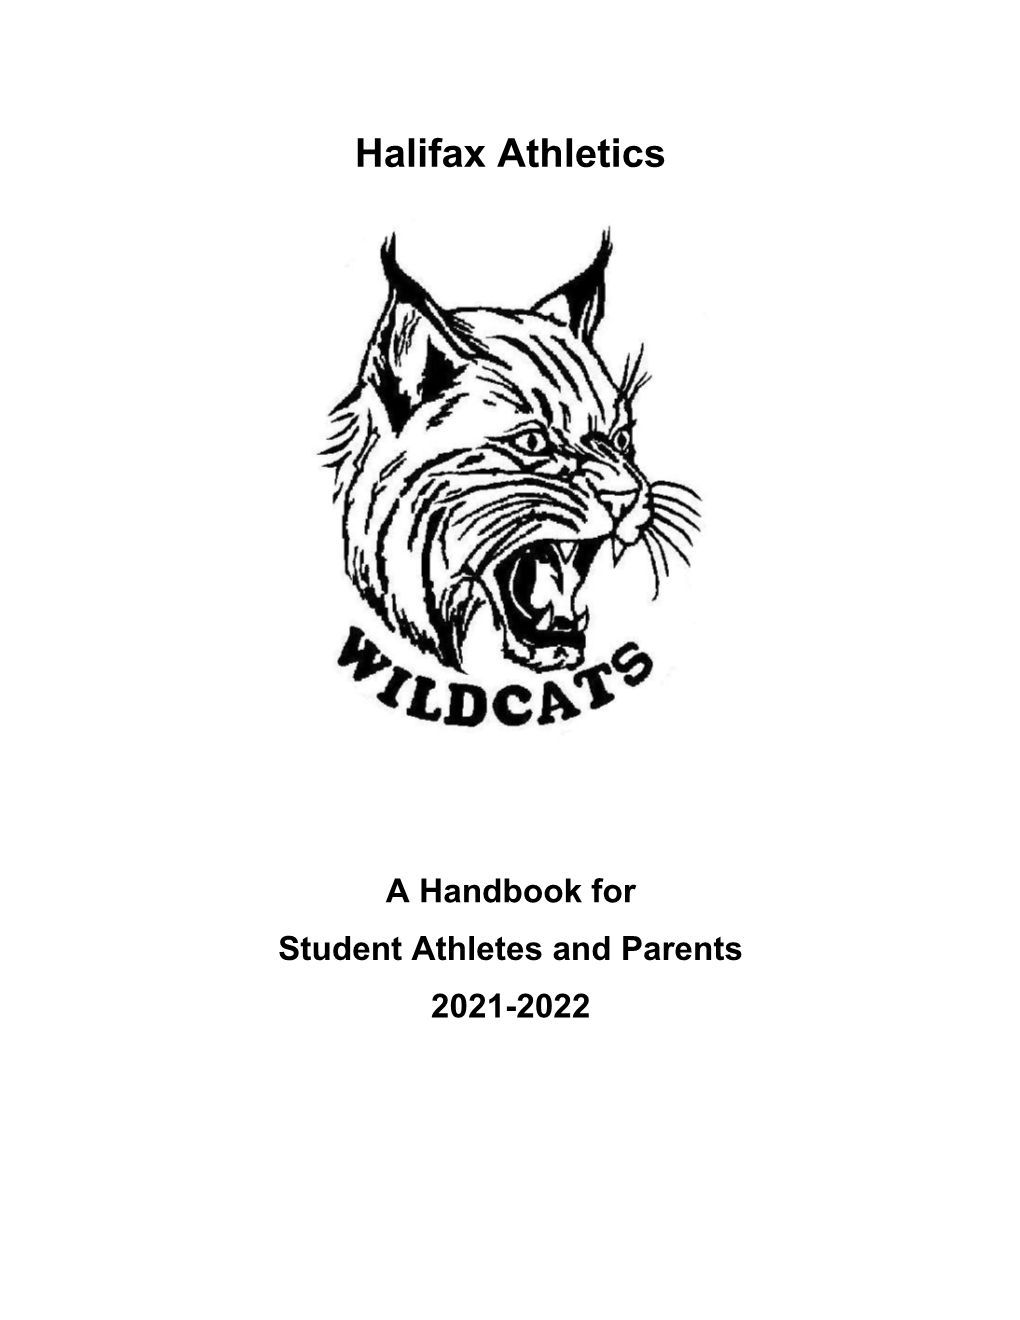 2021-22 Student Athlete Handbook